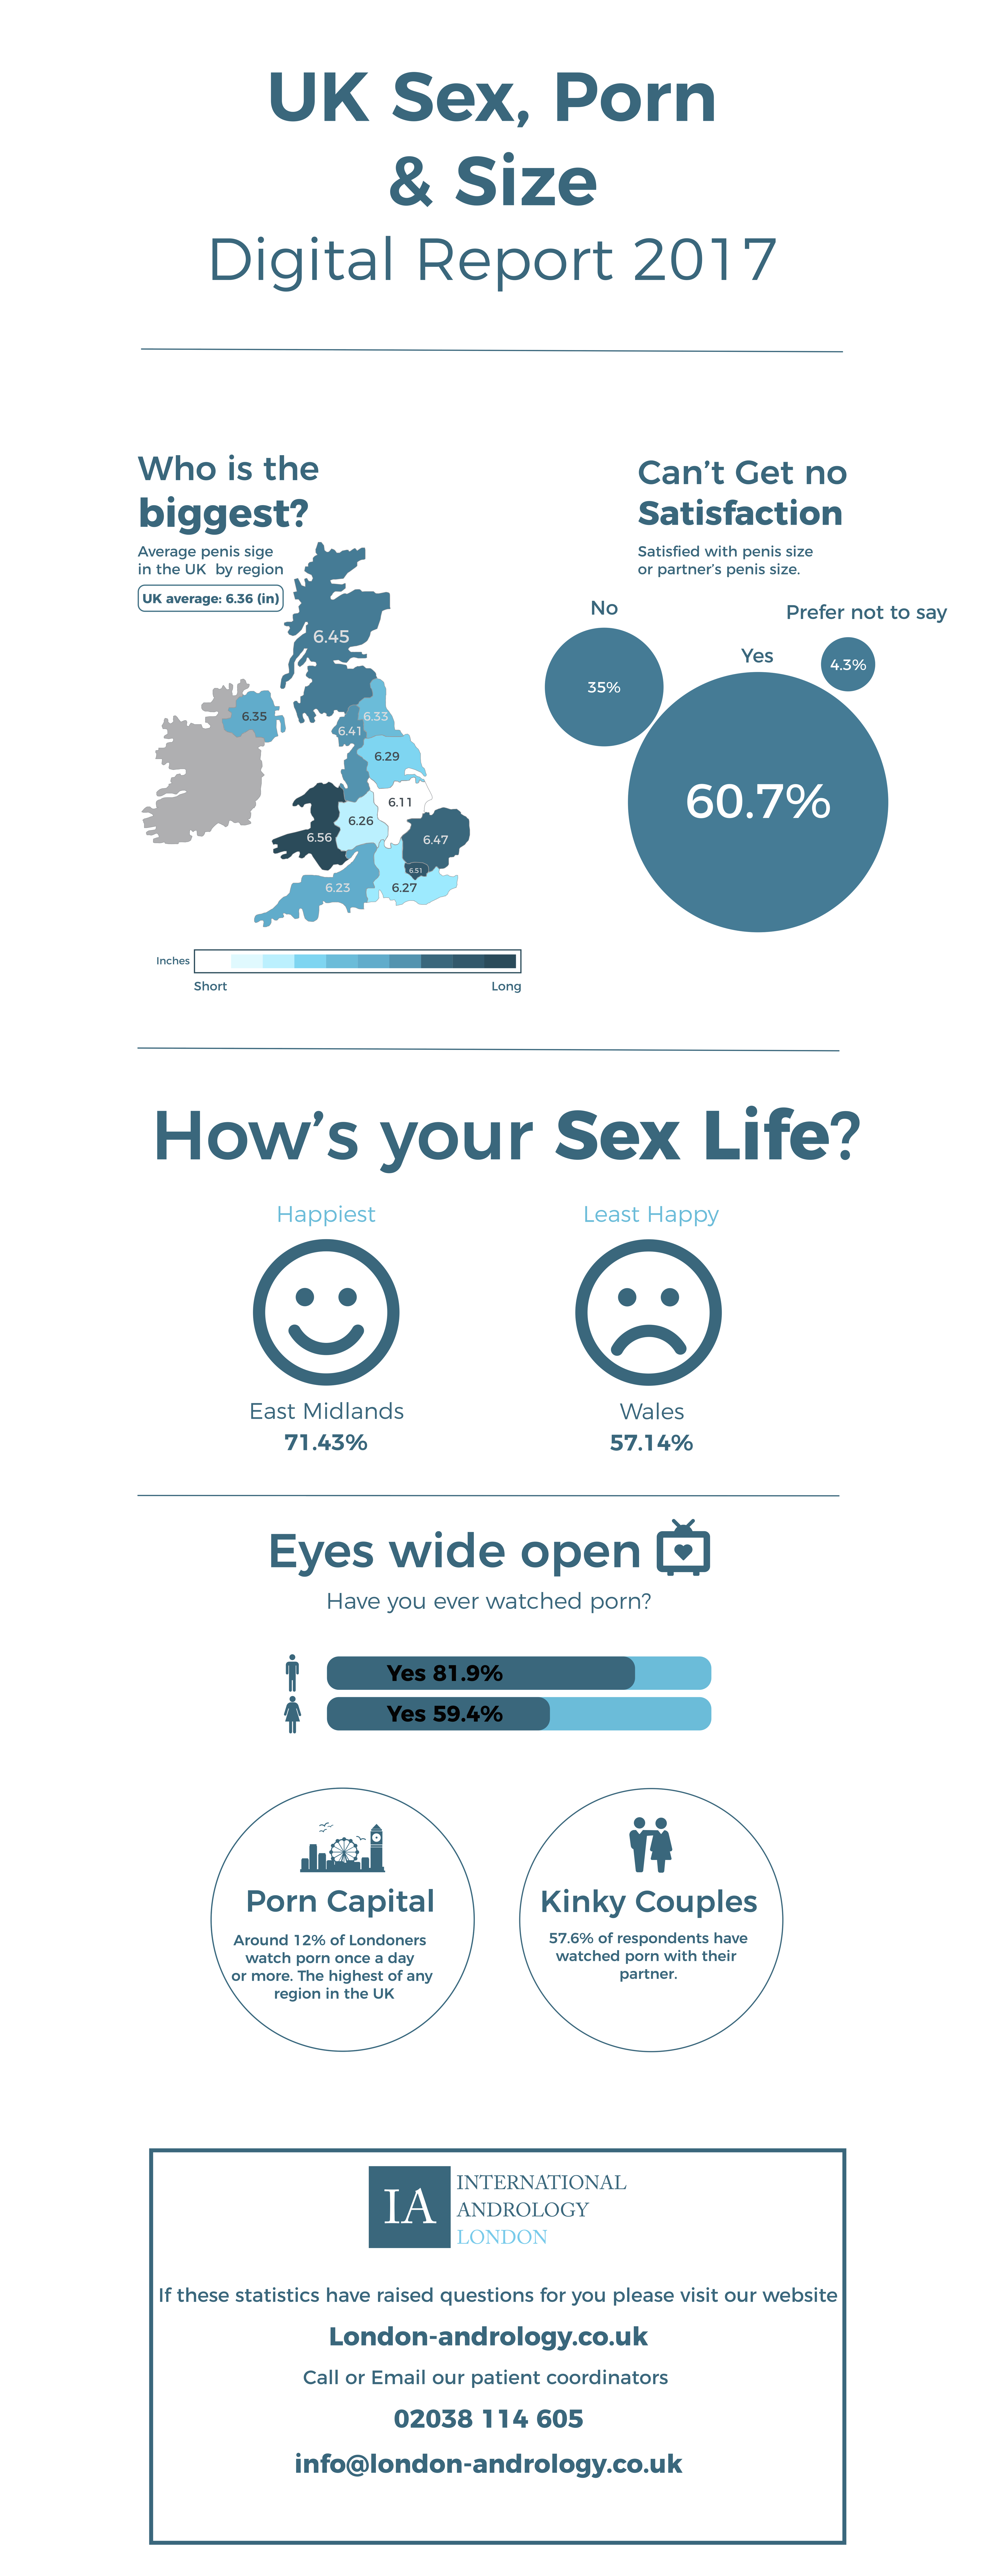 Www Uksex Com - UK Sex, Porn & Size Digital Report 2017 - International Andrology ...